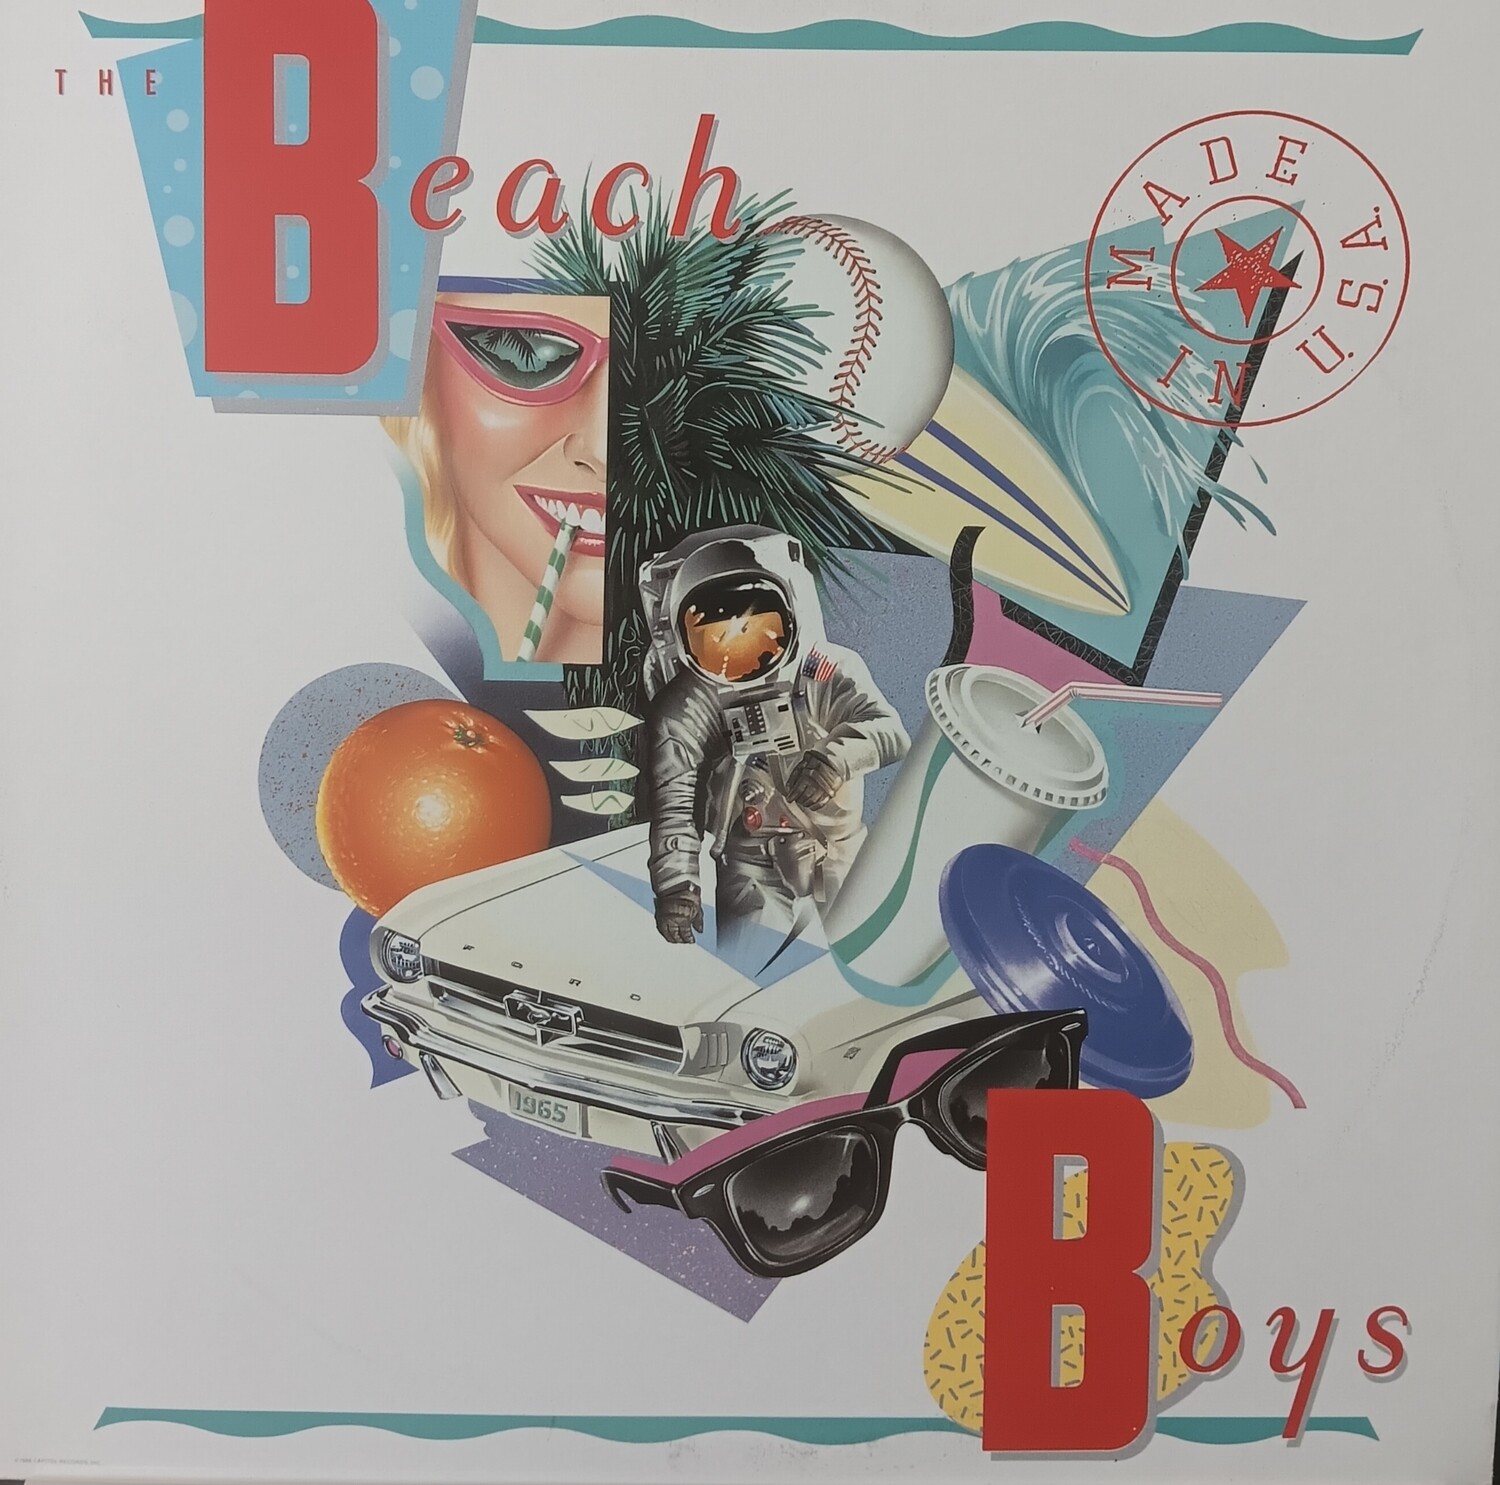 THE BEACH BOYS - Made in USA